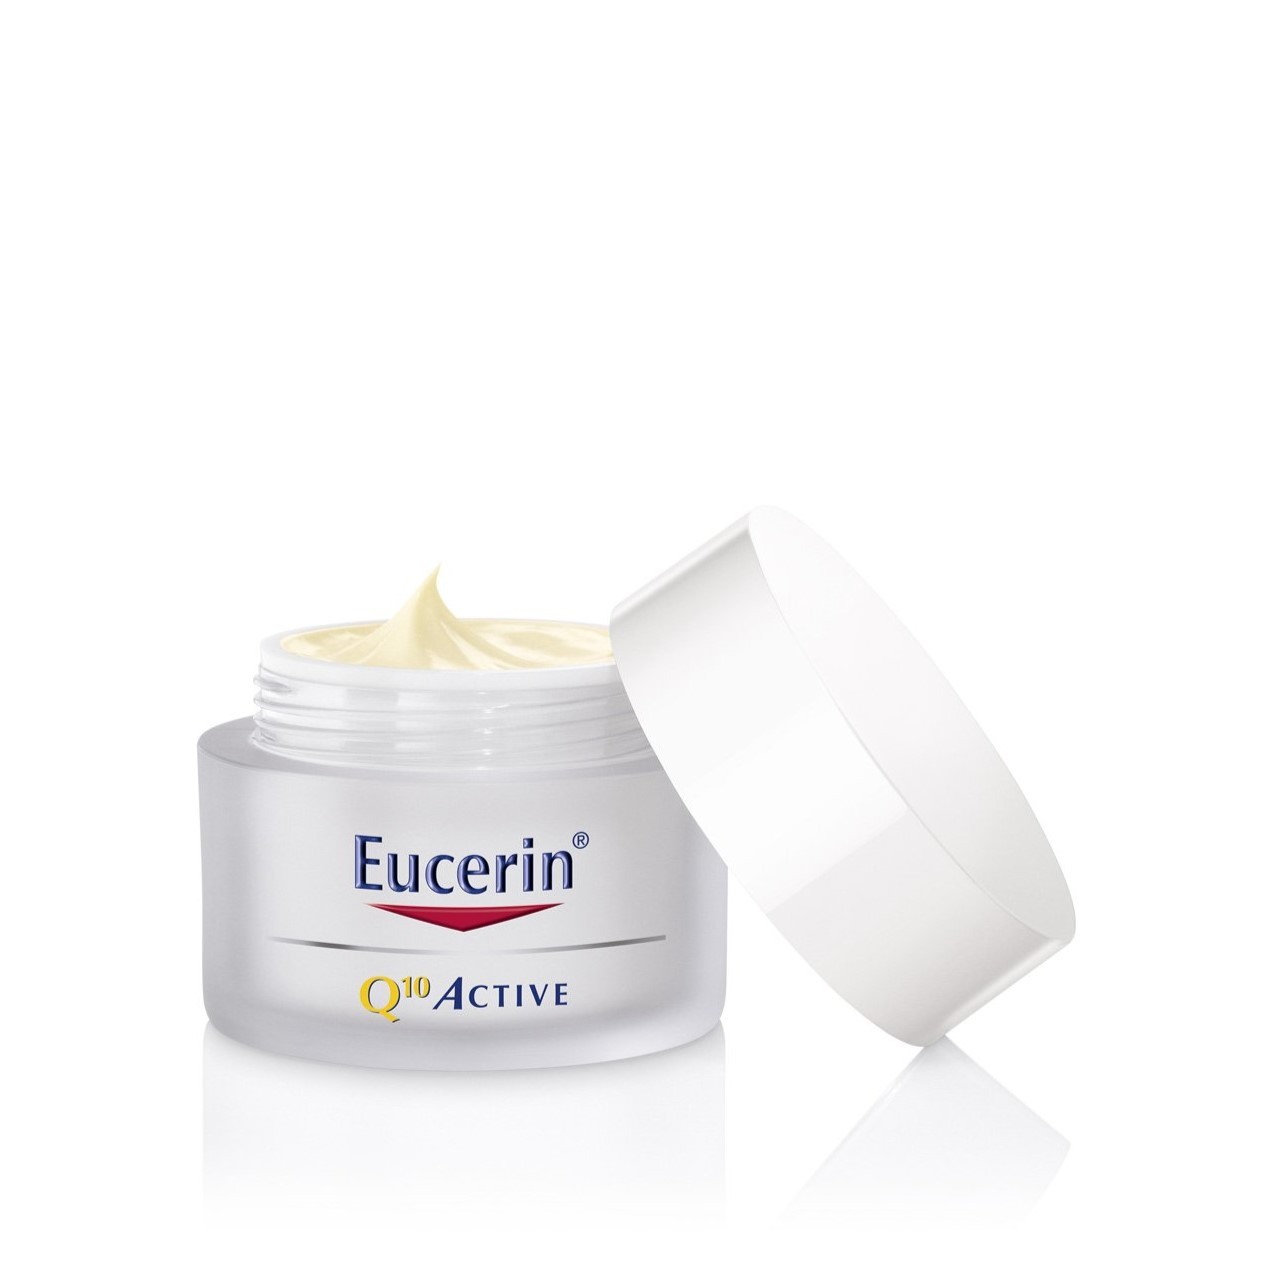 Eucerin Q10 Active Anti-Wrinkle Day Cream Dry Skin 50ml (1.69fl oz)